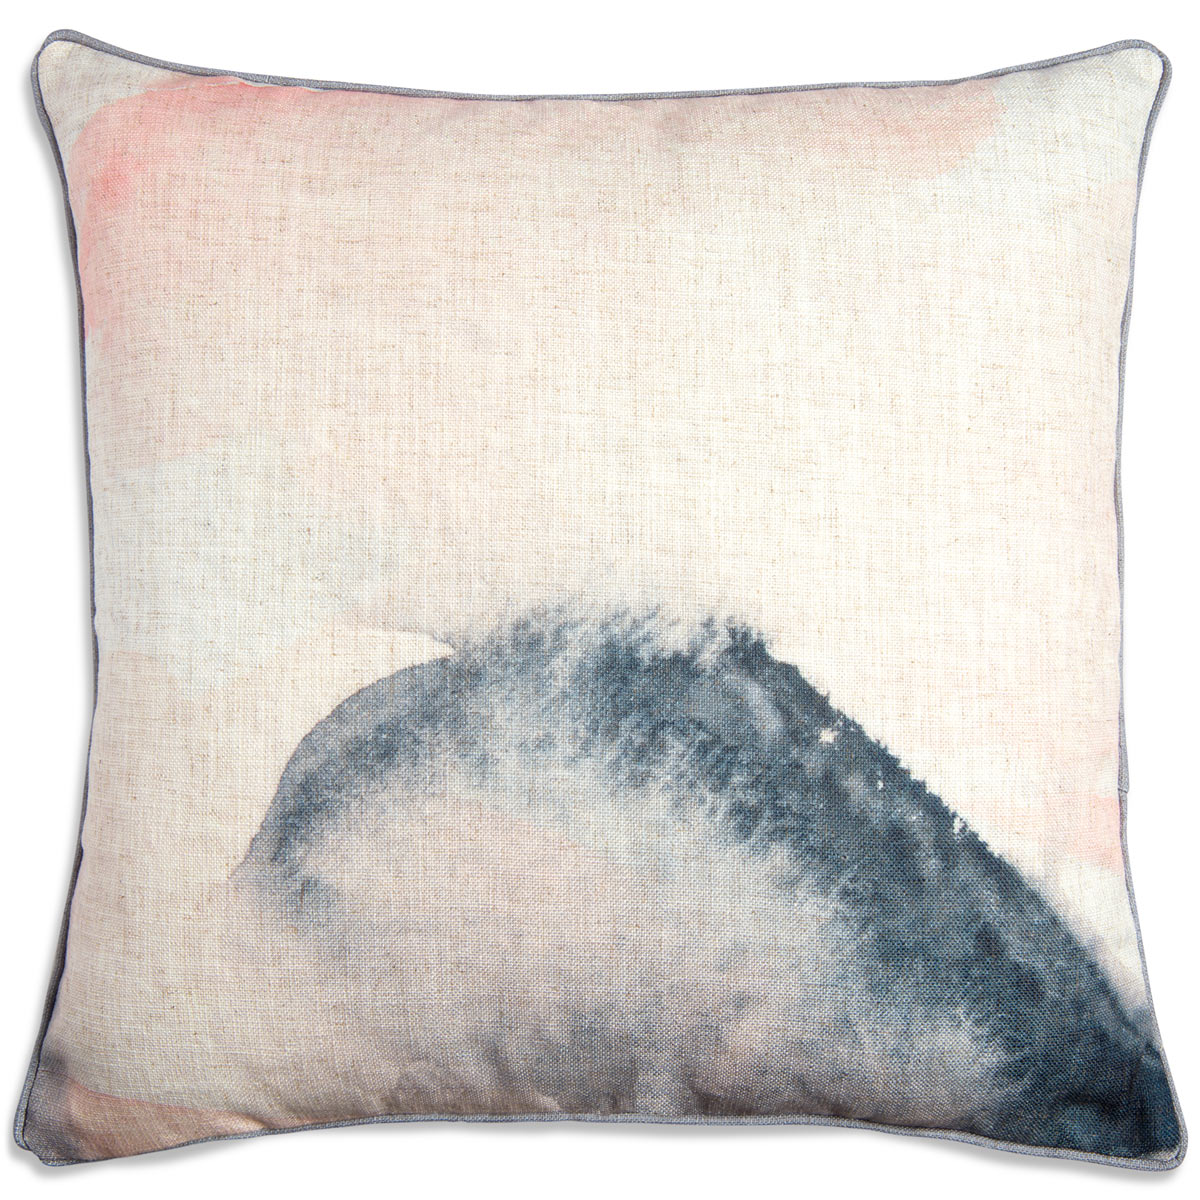 Blush Abstract Greywelt Pillow - ModShop1.com